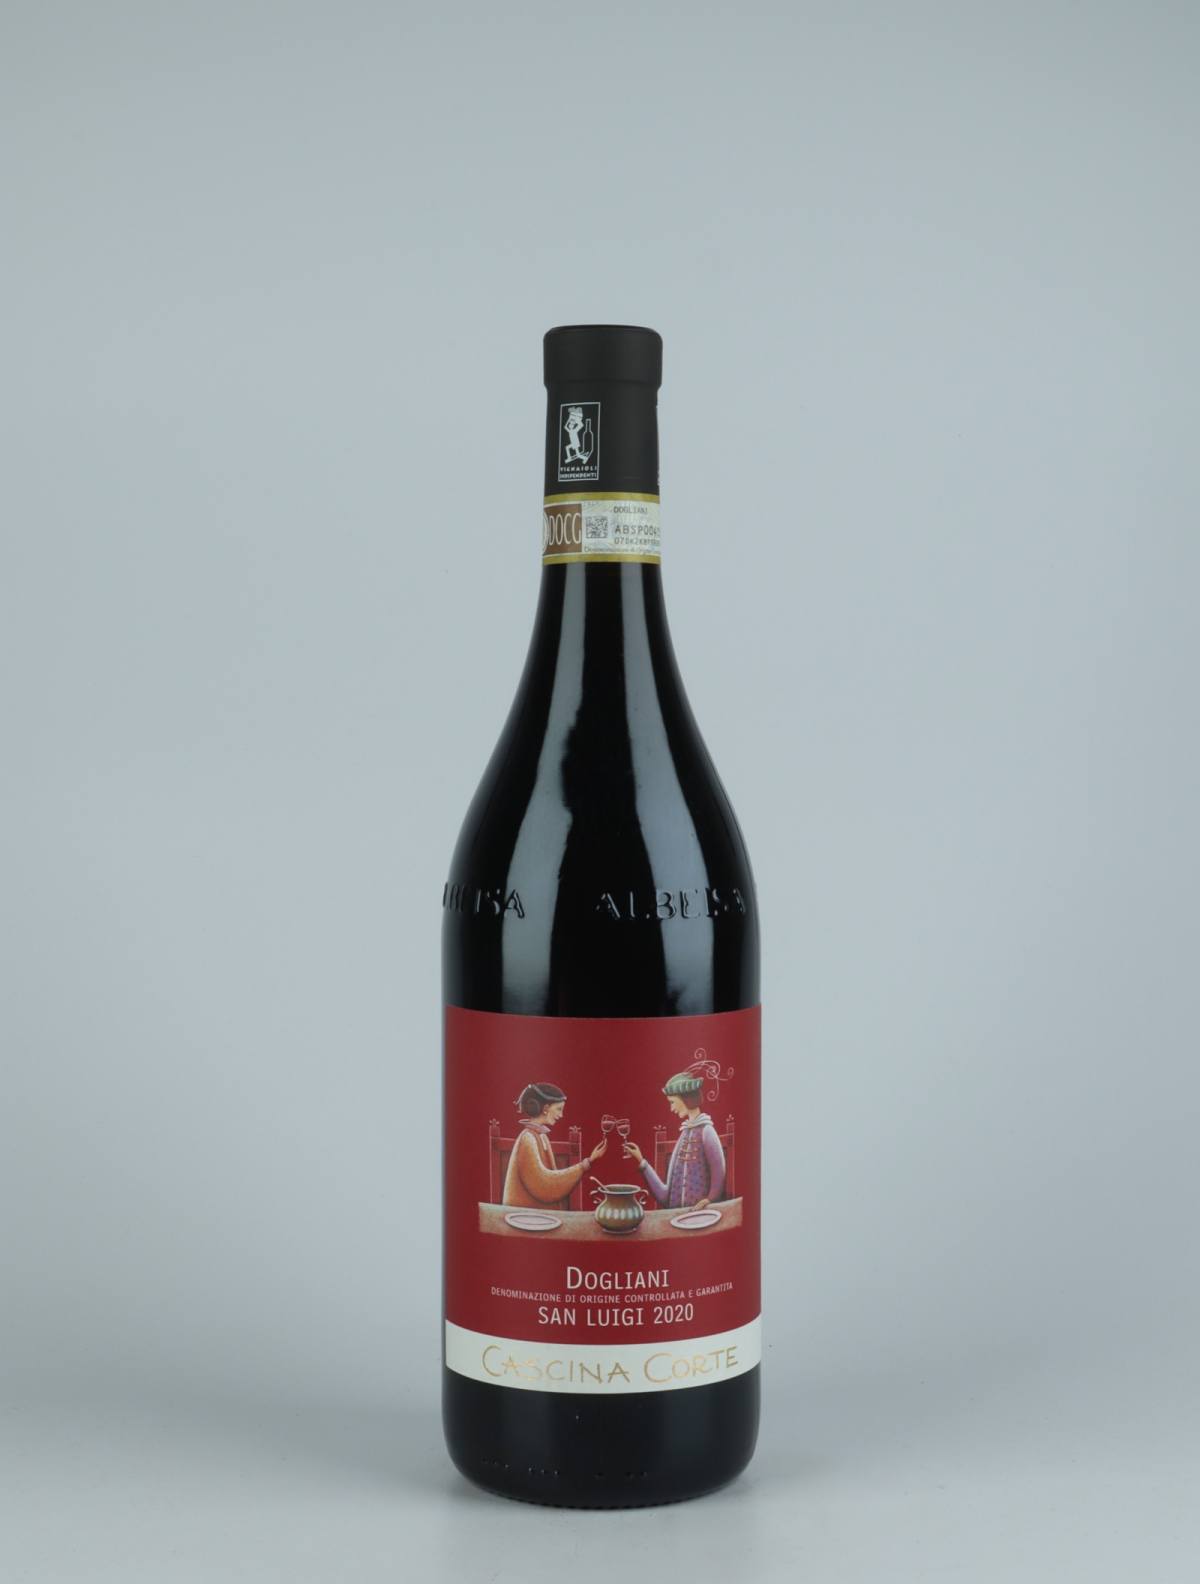 En flaske 2020 Dogliani - San Luigi Rødvin fra Cascina Corte, Piemonte i Italien